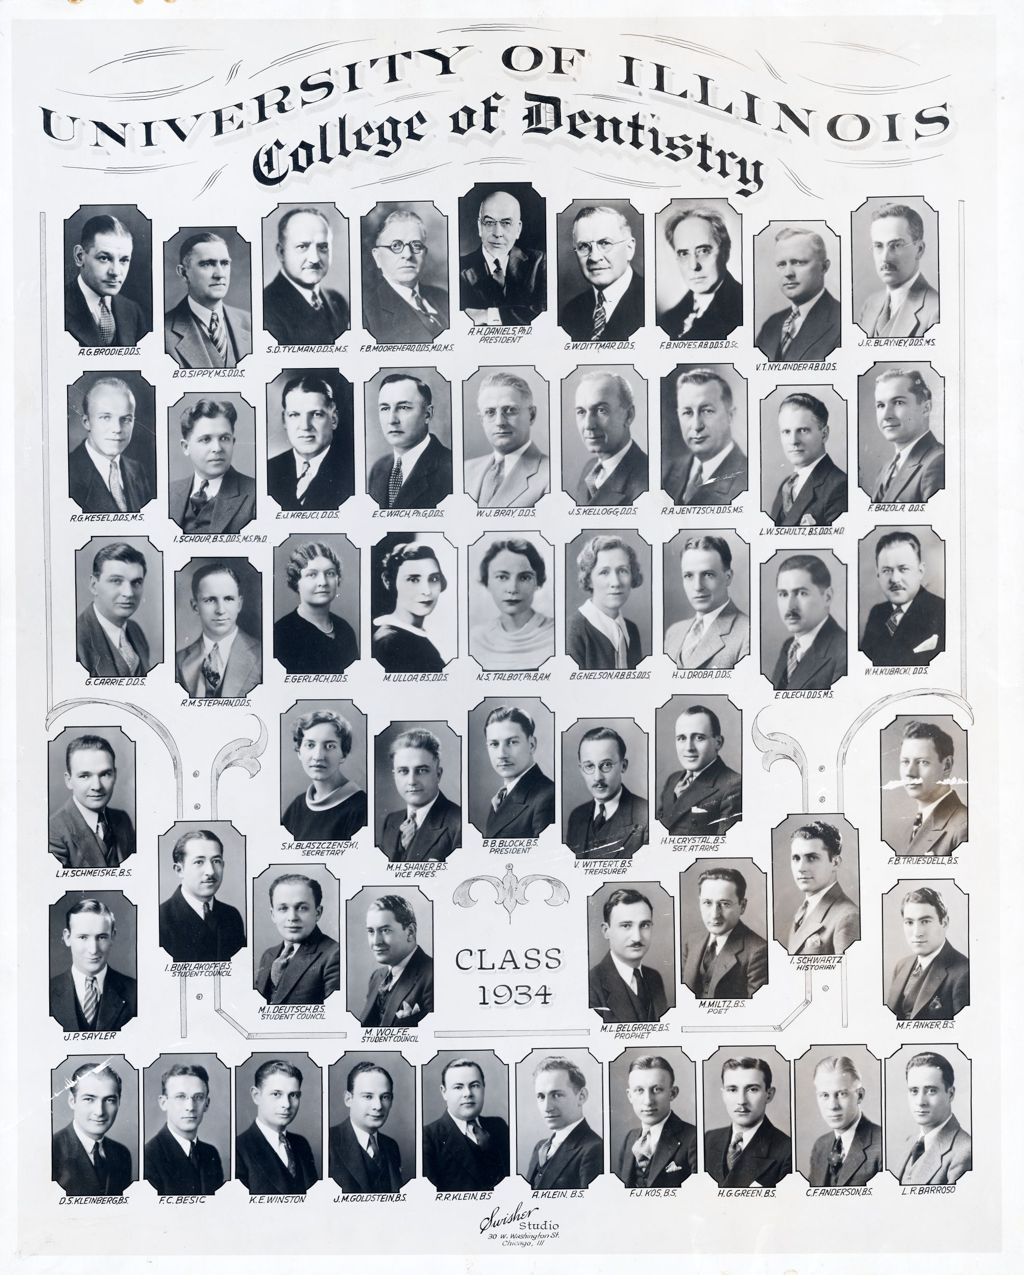 Miniature of 1934 graduating class, University of Illinois College of Dentistry